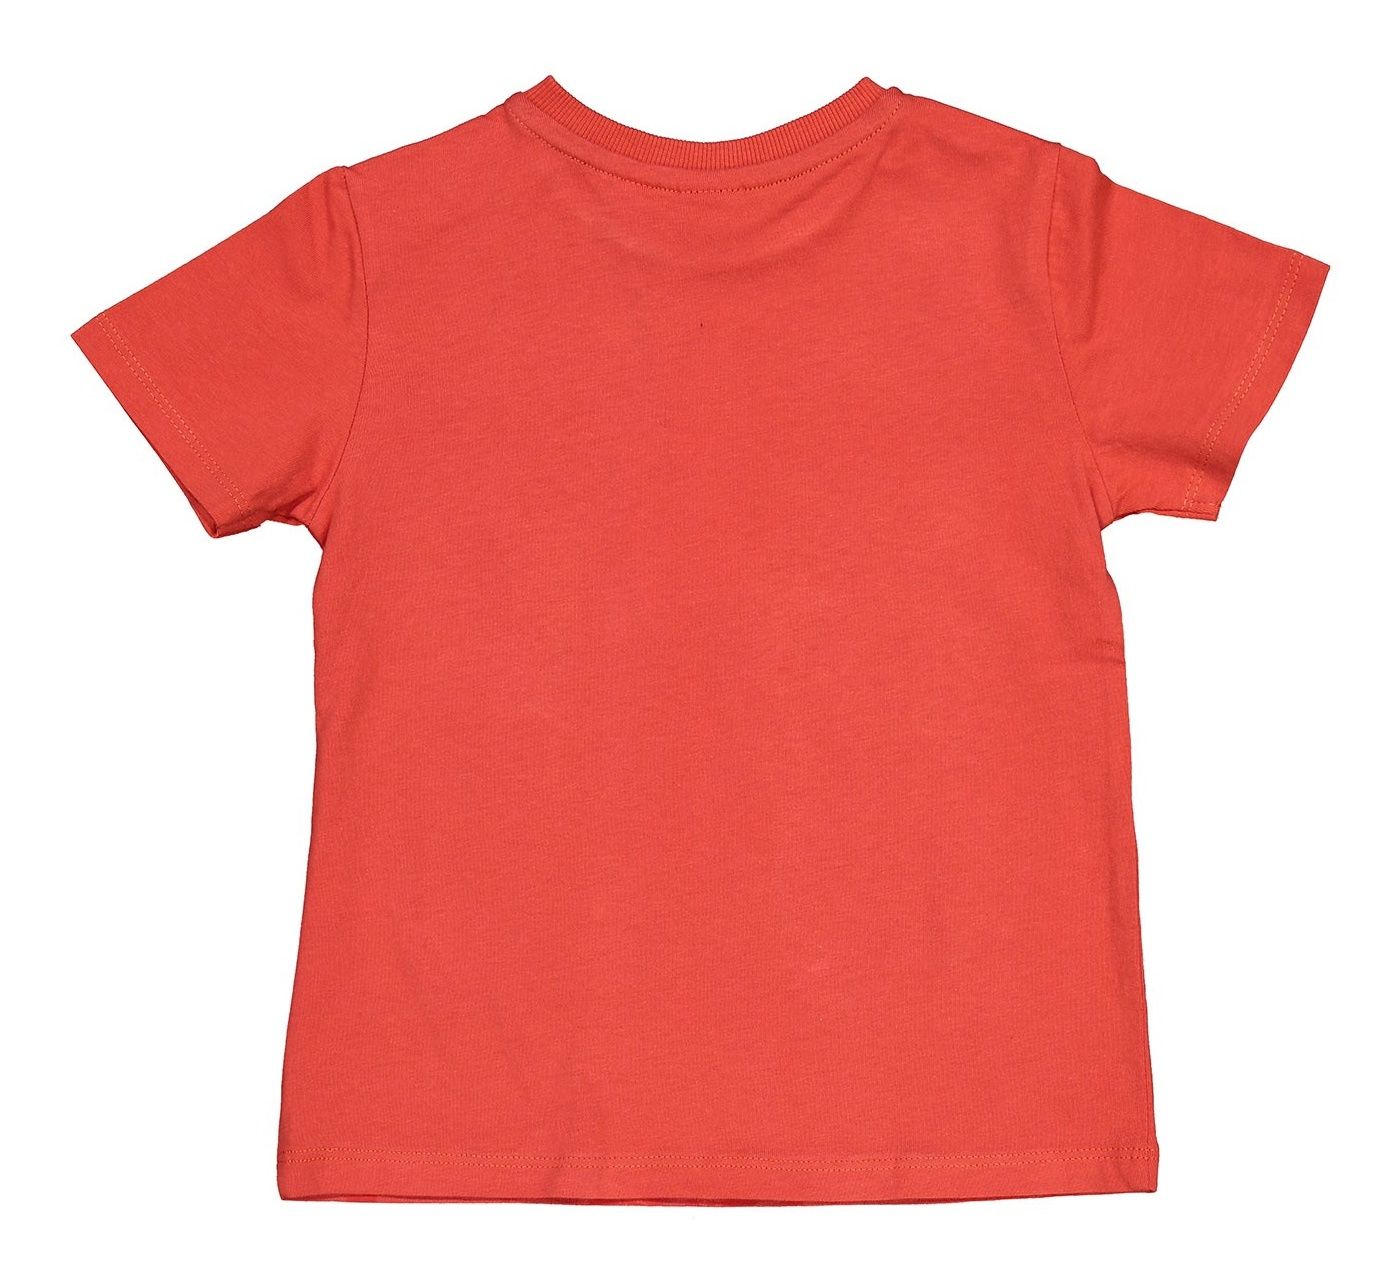 تی شرت و شلوارک نخی نوزادی پسرانه - بلوکیدز - قرمز و سفيد - 4